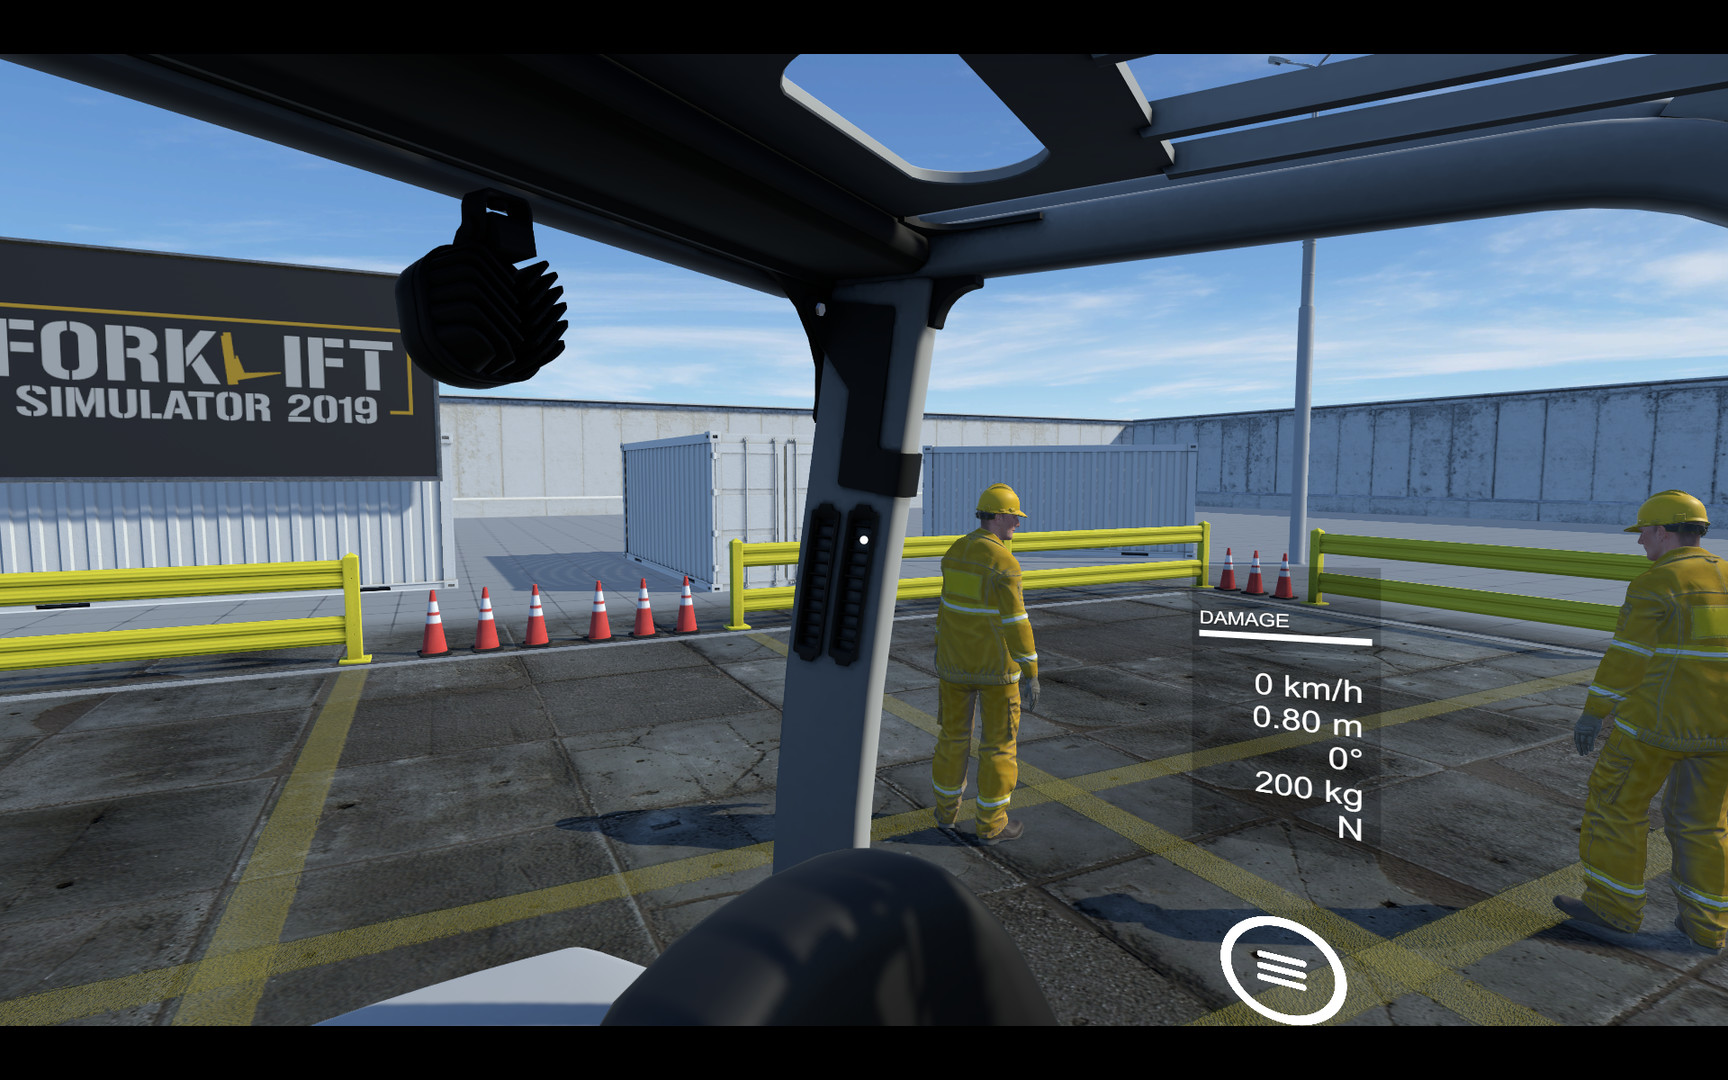 Forklift Simulator 2019 on Steam